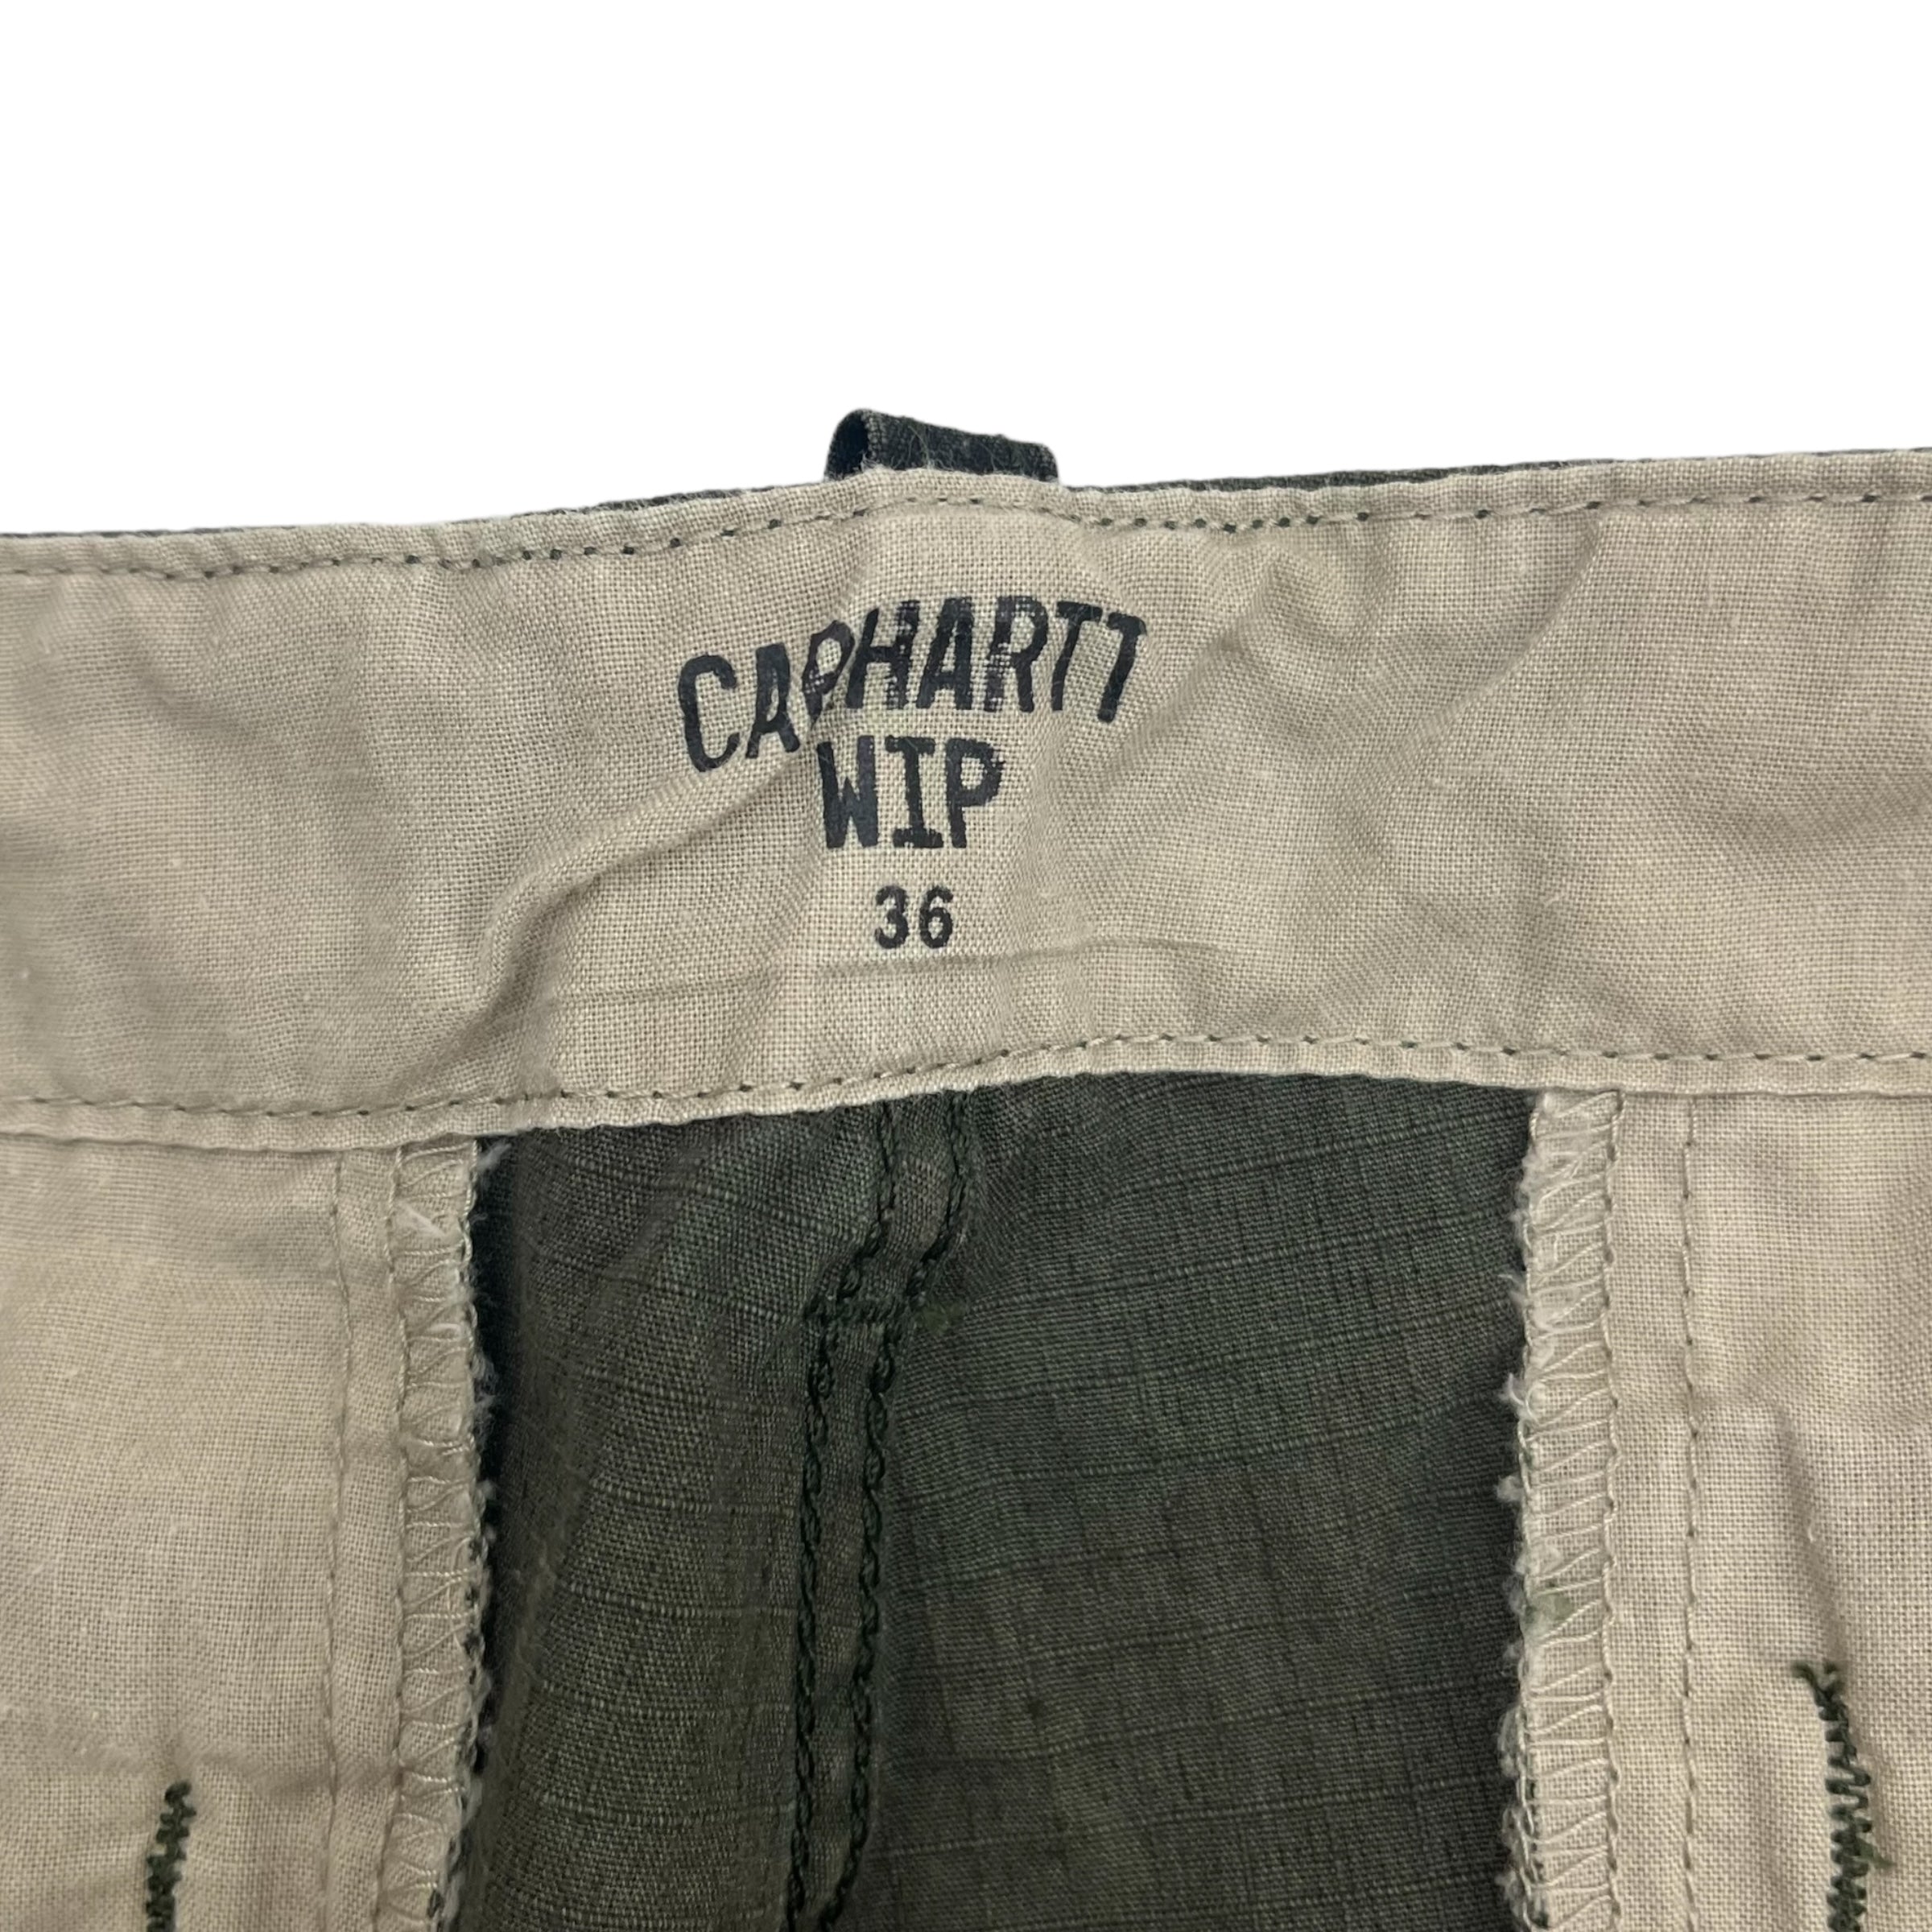 Carhartt WIP Cargo Shorts Woodland Camo